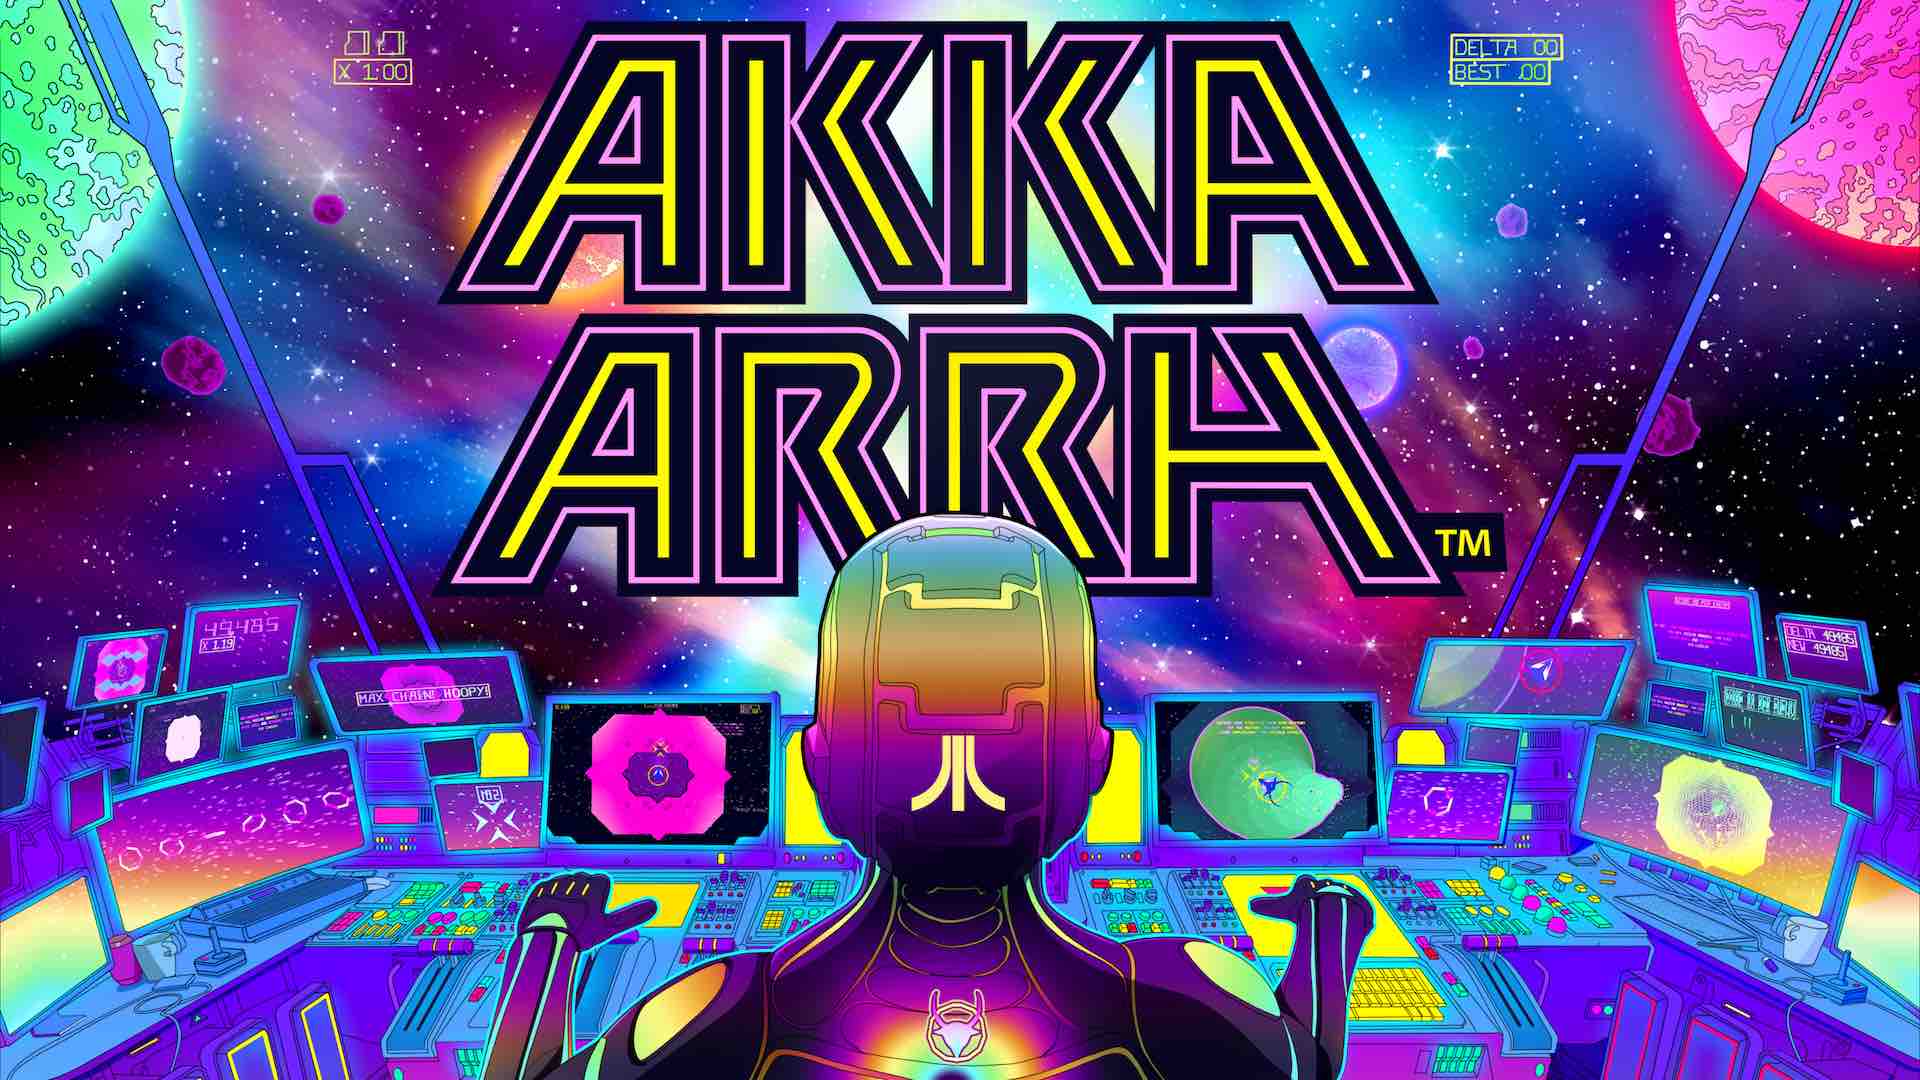 Akka Arrh, remake da Atari de 1982